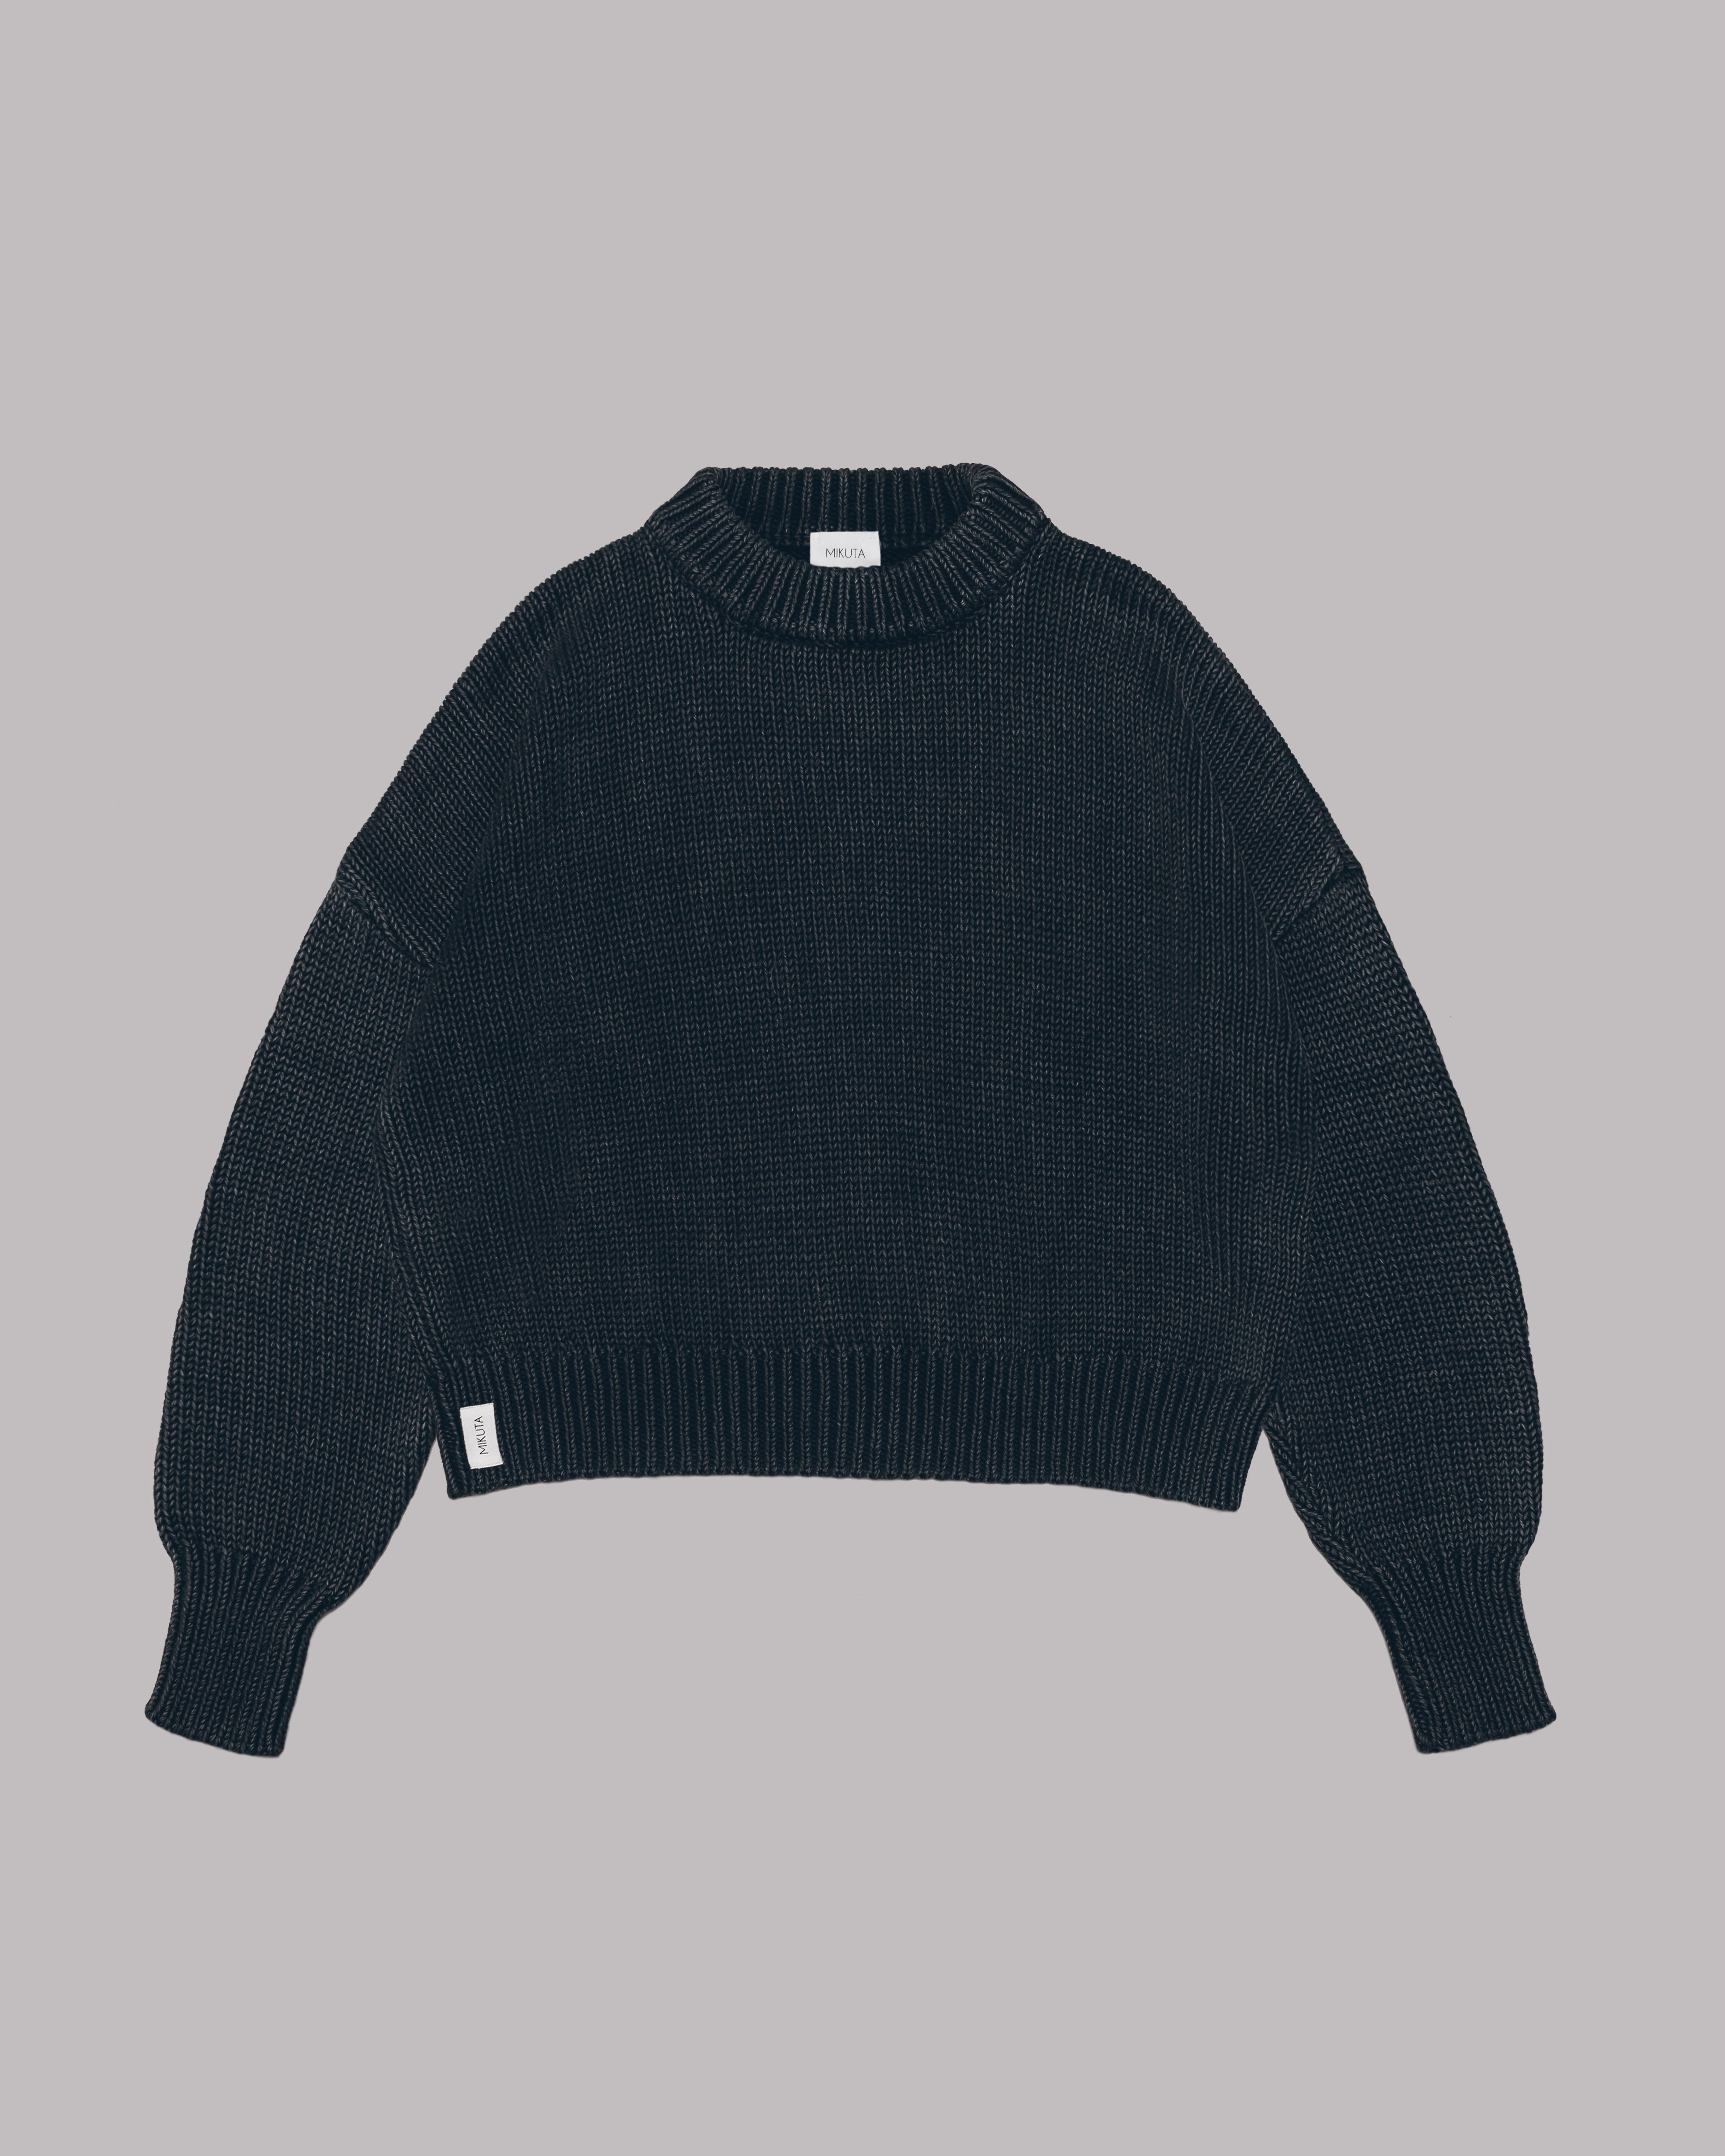 The Dark Faded Knit Sweater